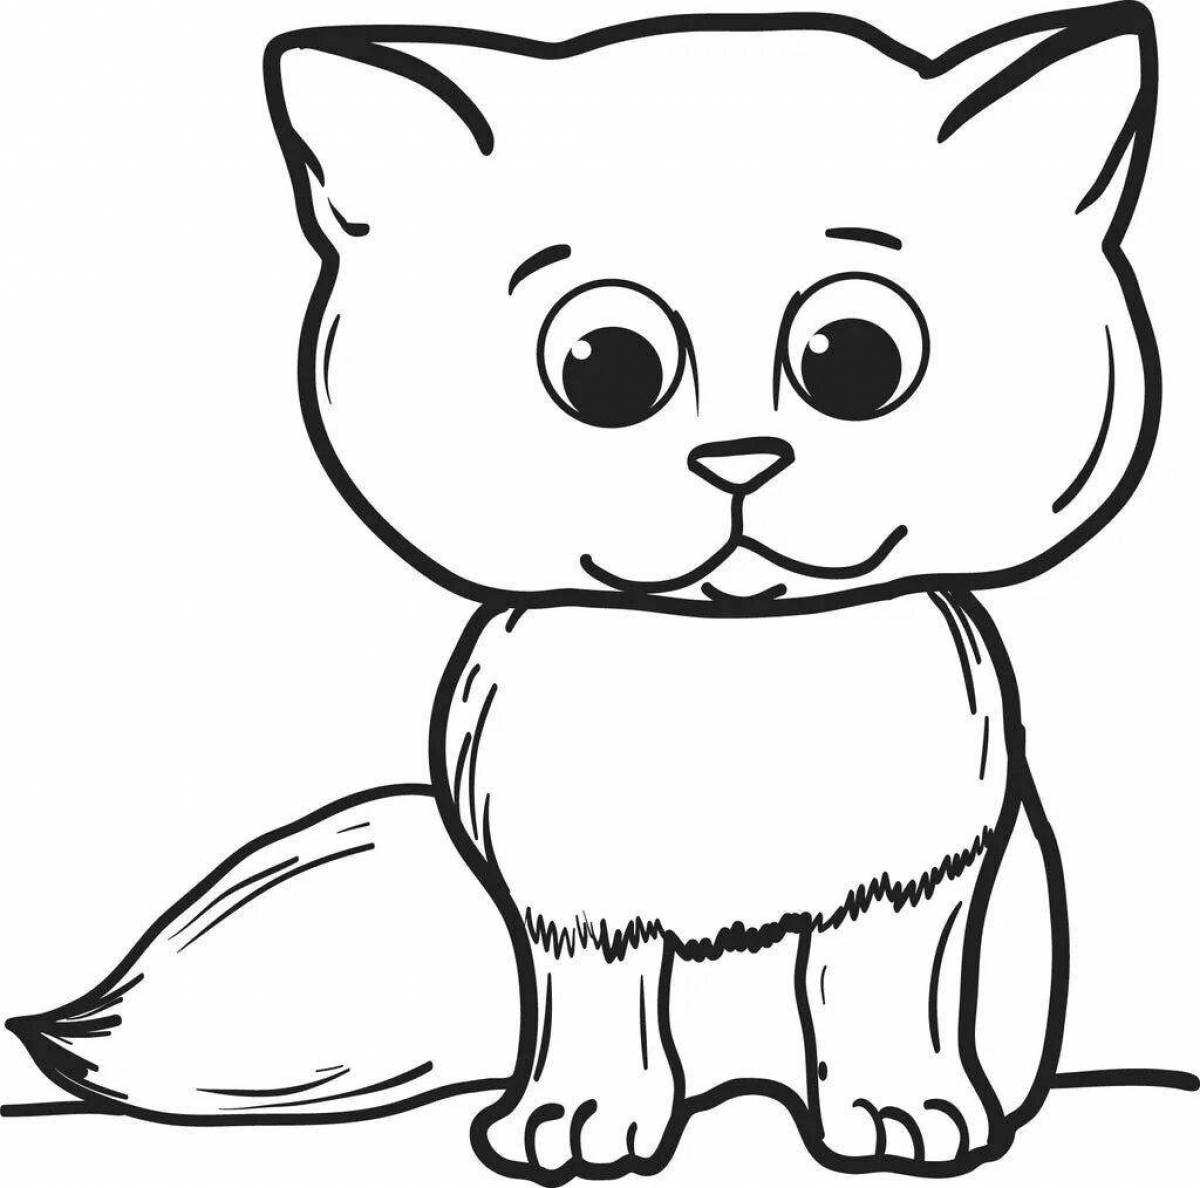 Fancy little cat coloring page